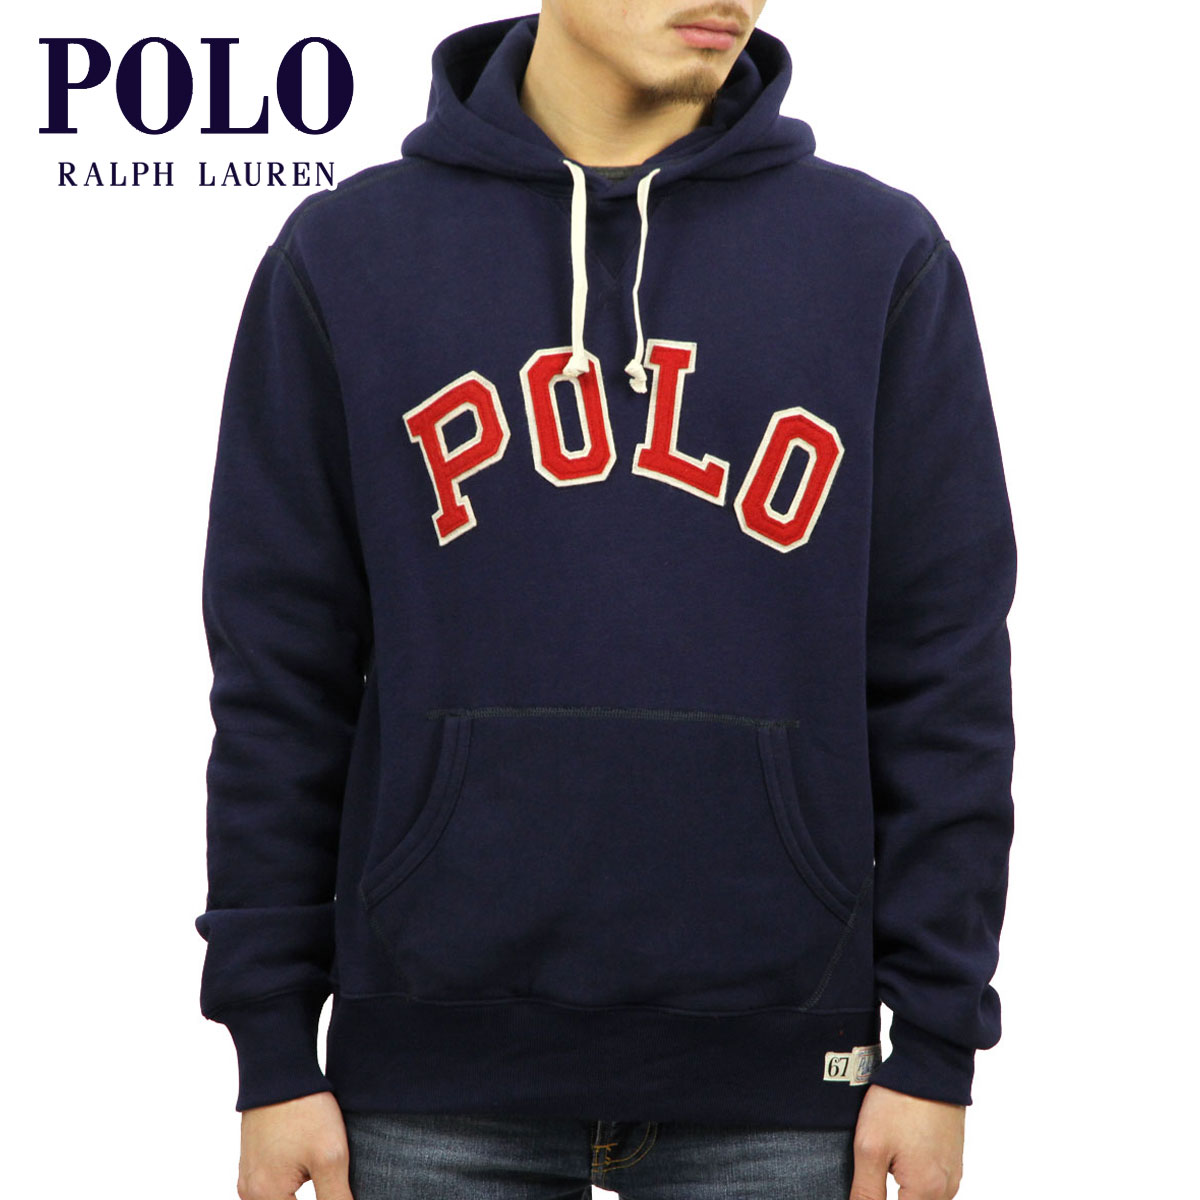 polo ralph lauren logo sweatshirt